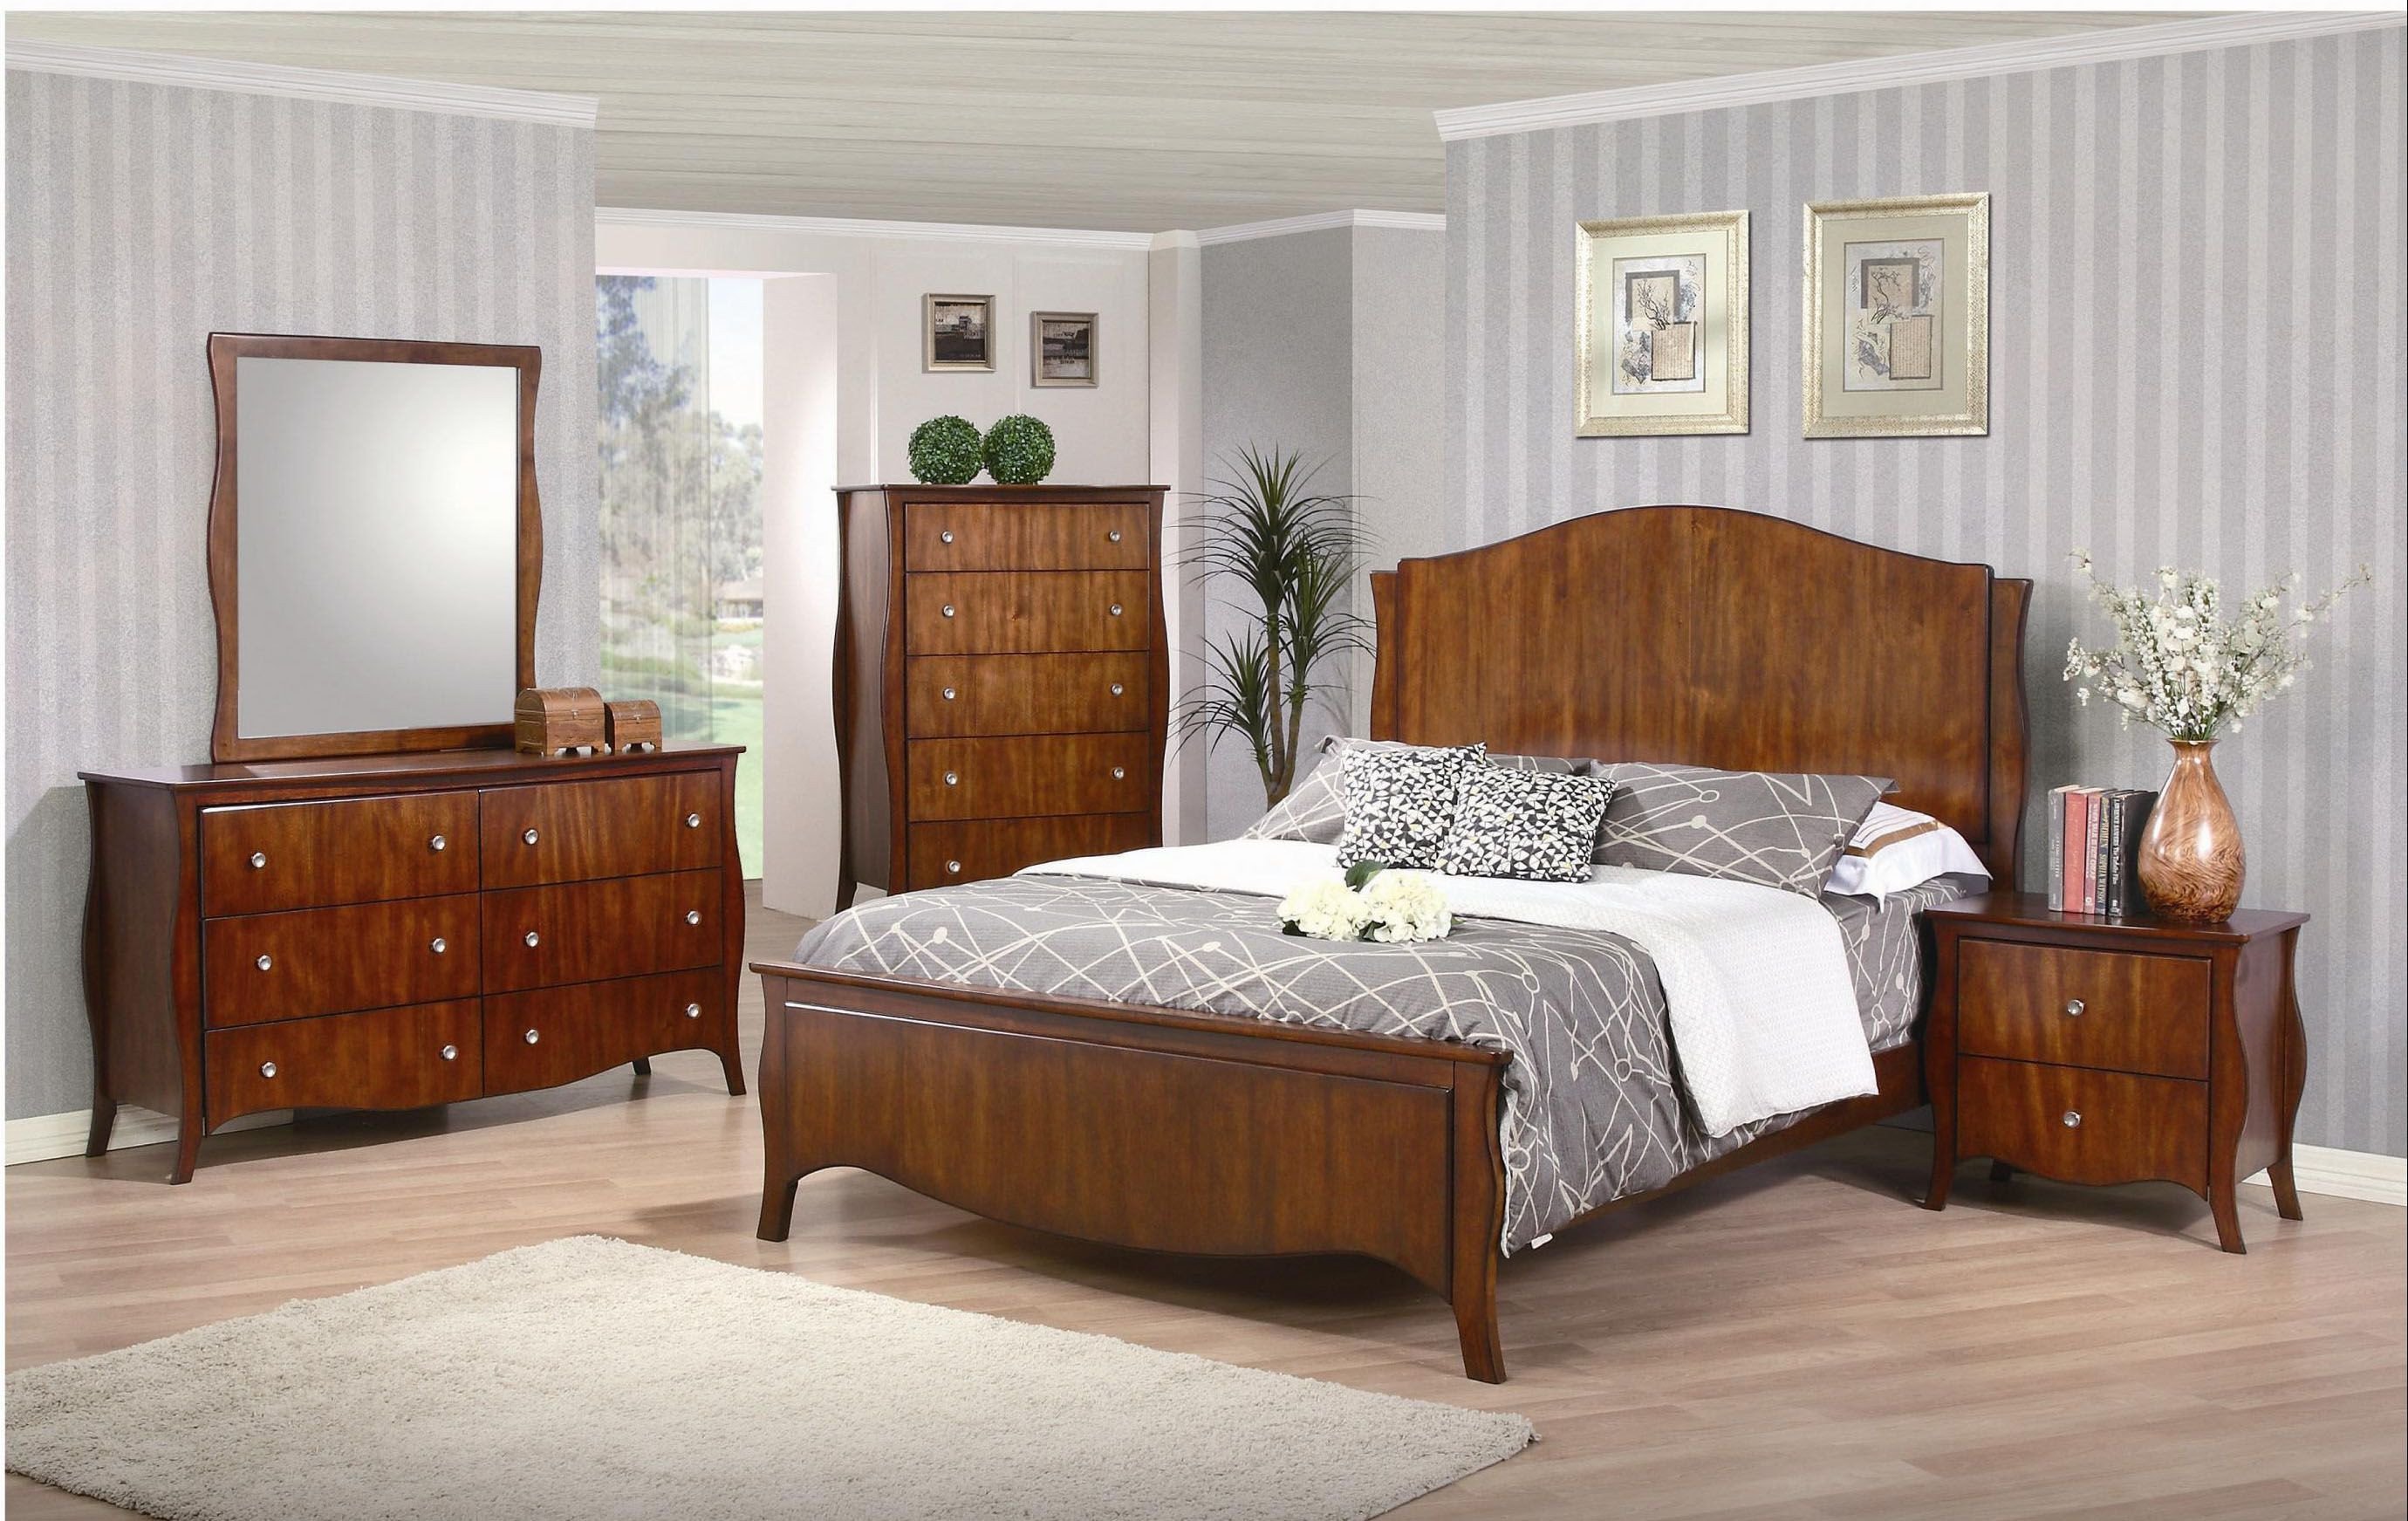 thornton furniture broyhill bedroom suite